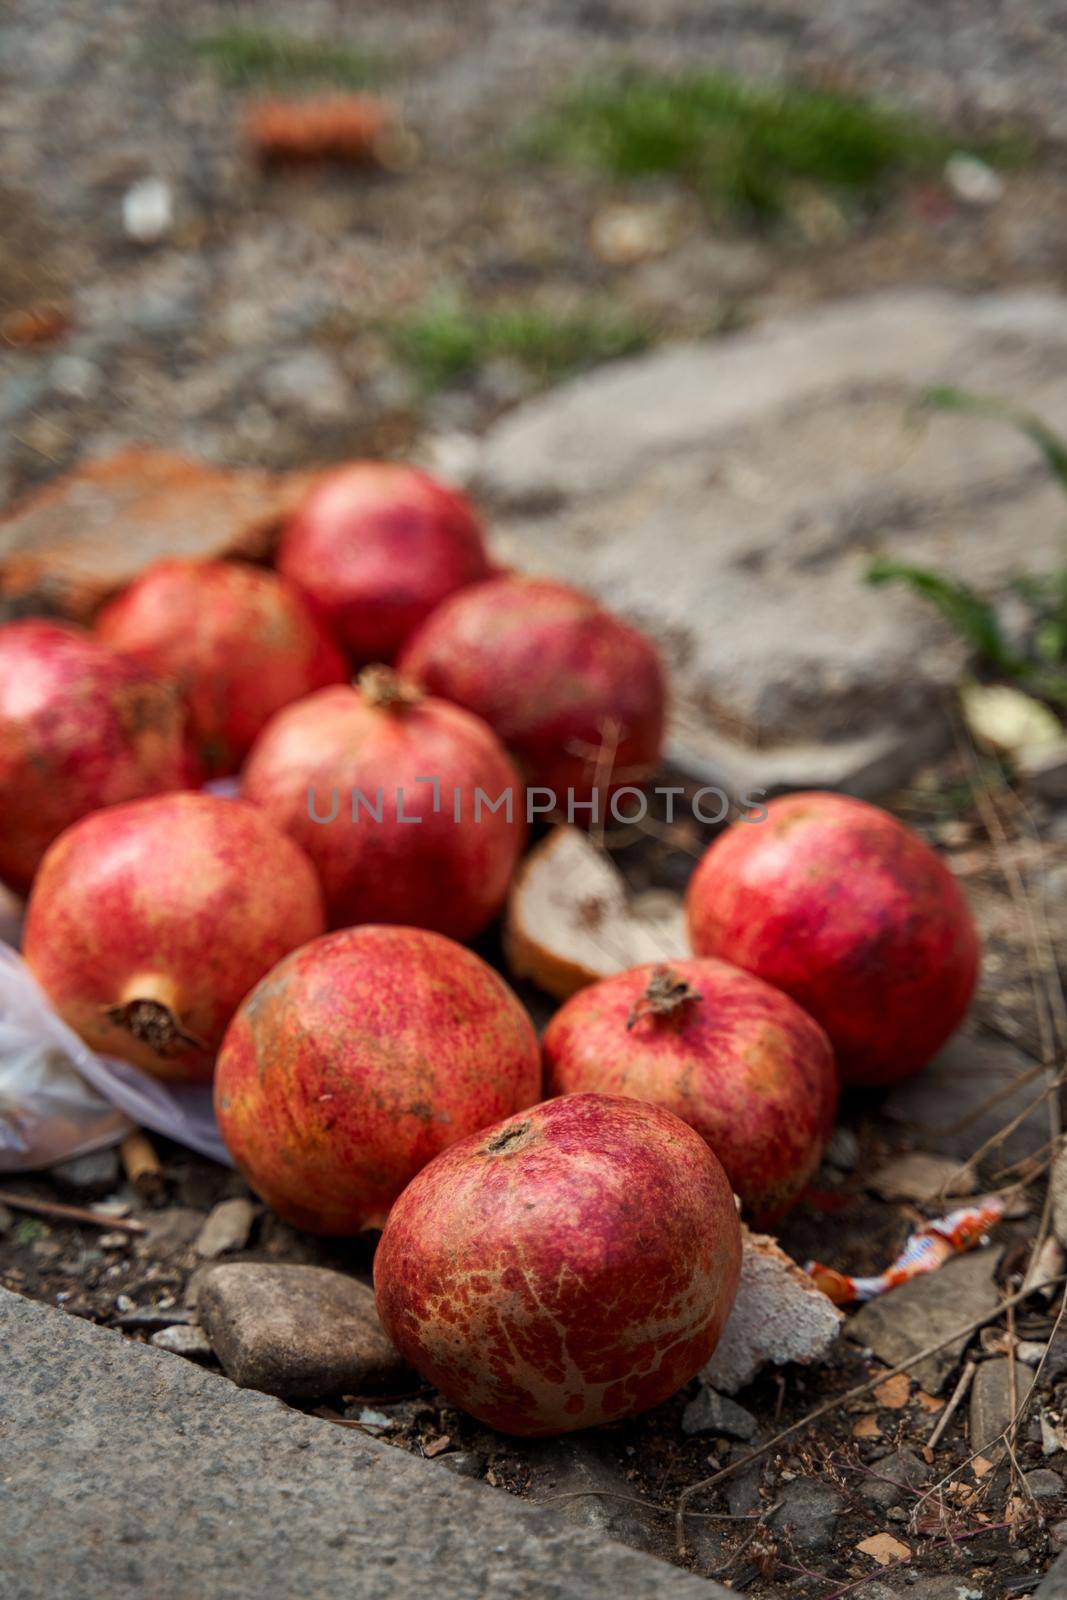 Ripe pomegranate fruits lie near the trash can. Help the homeless.